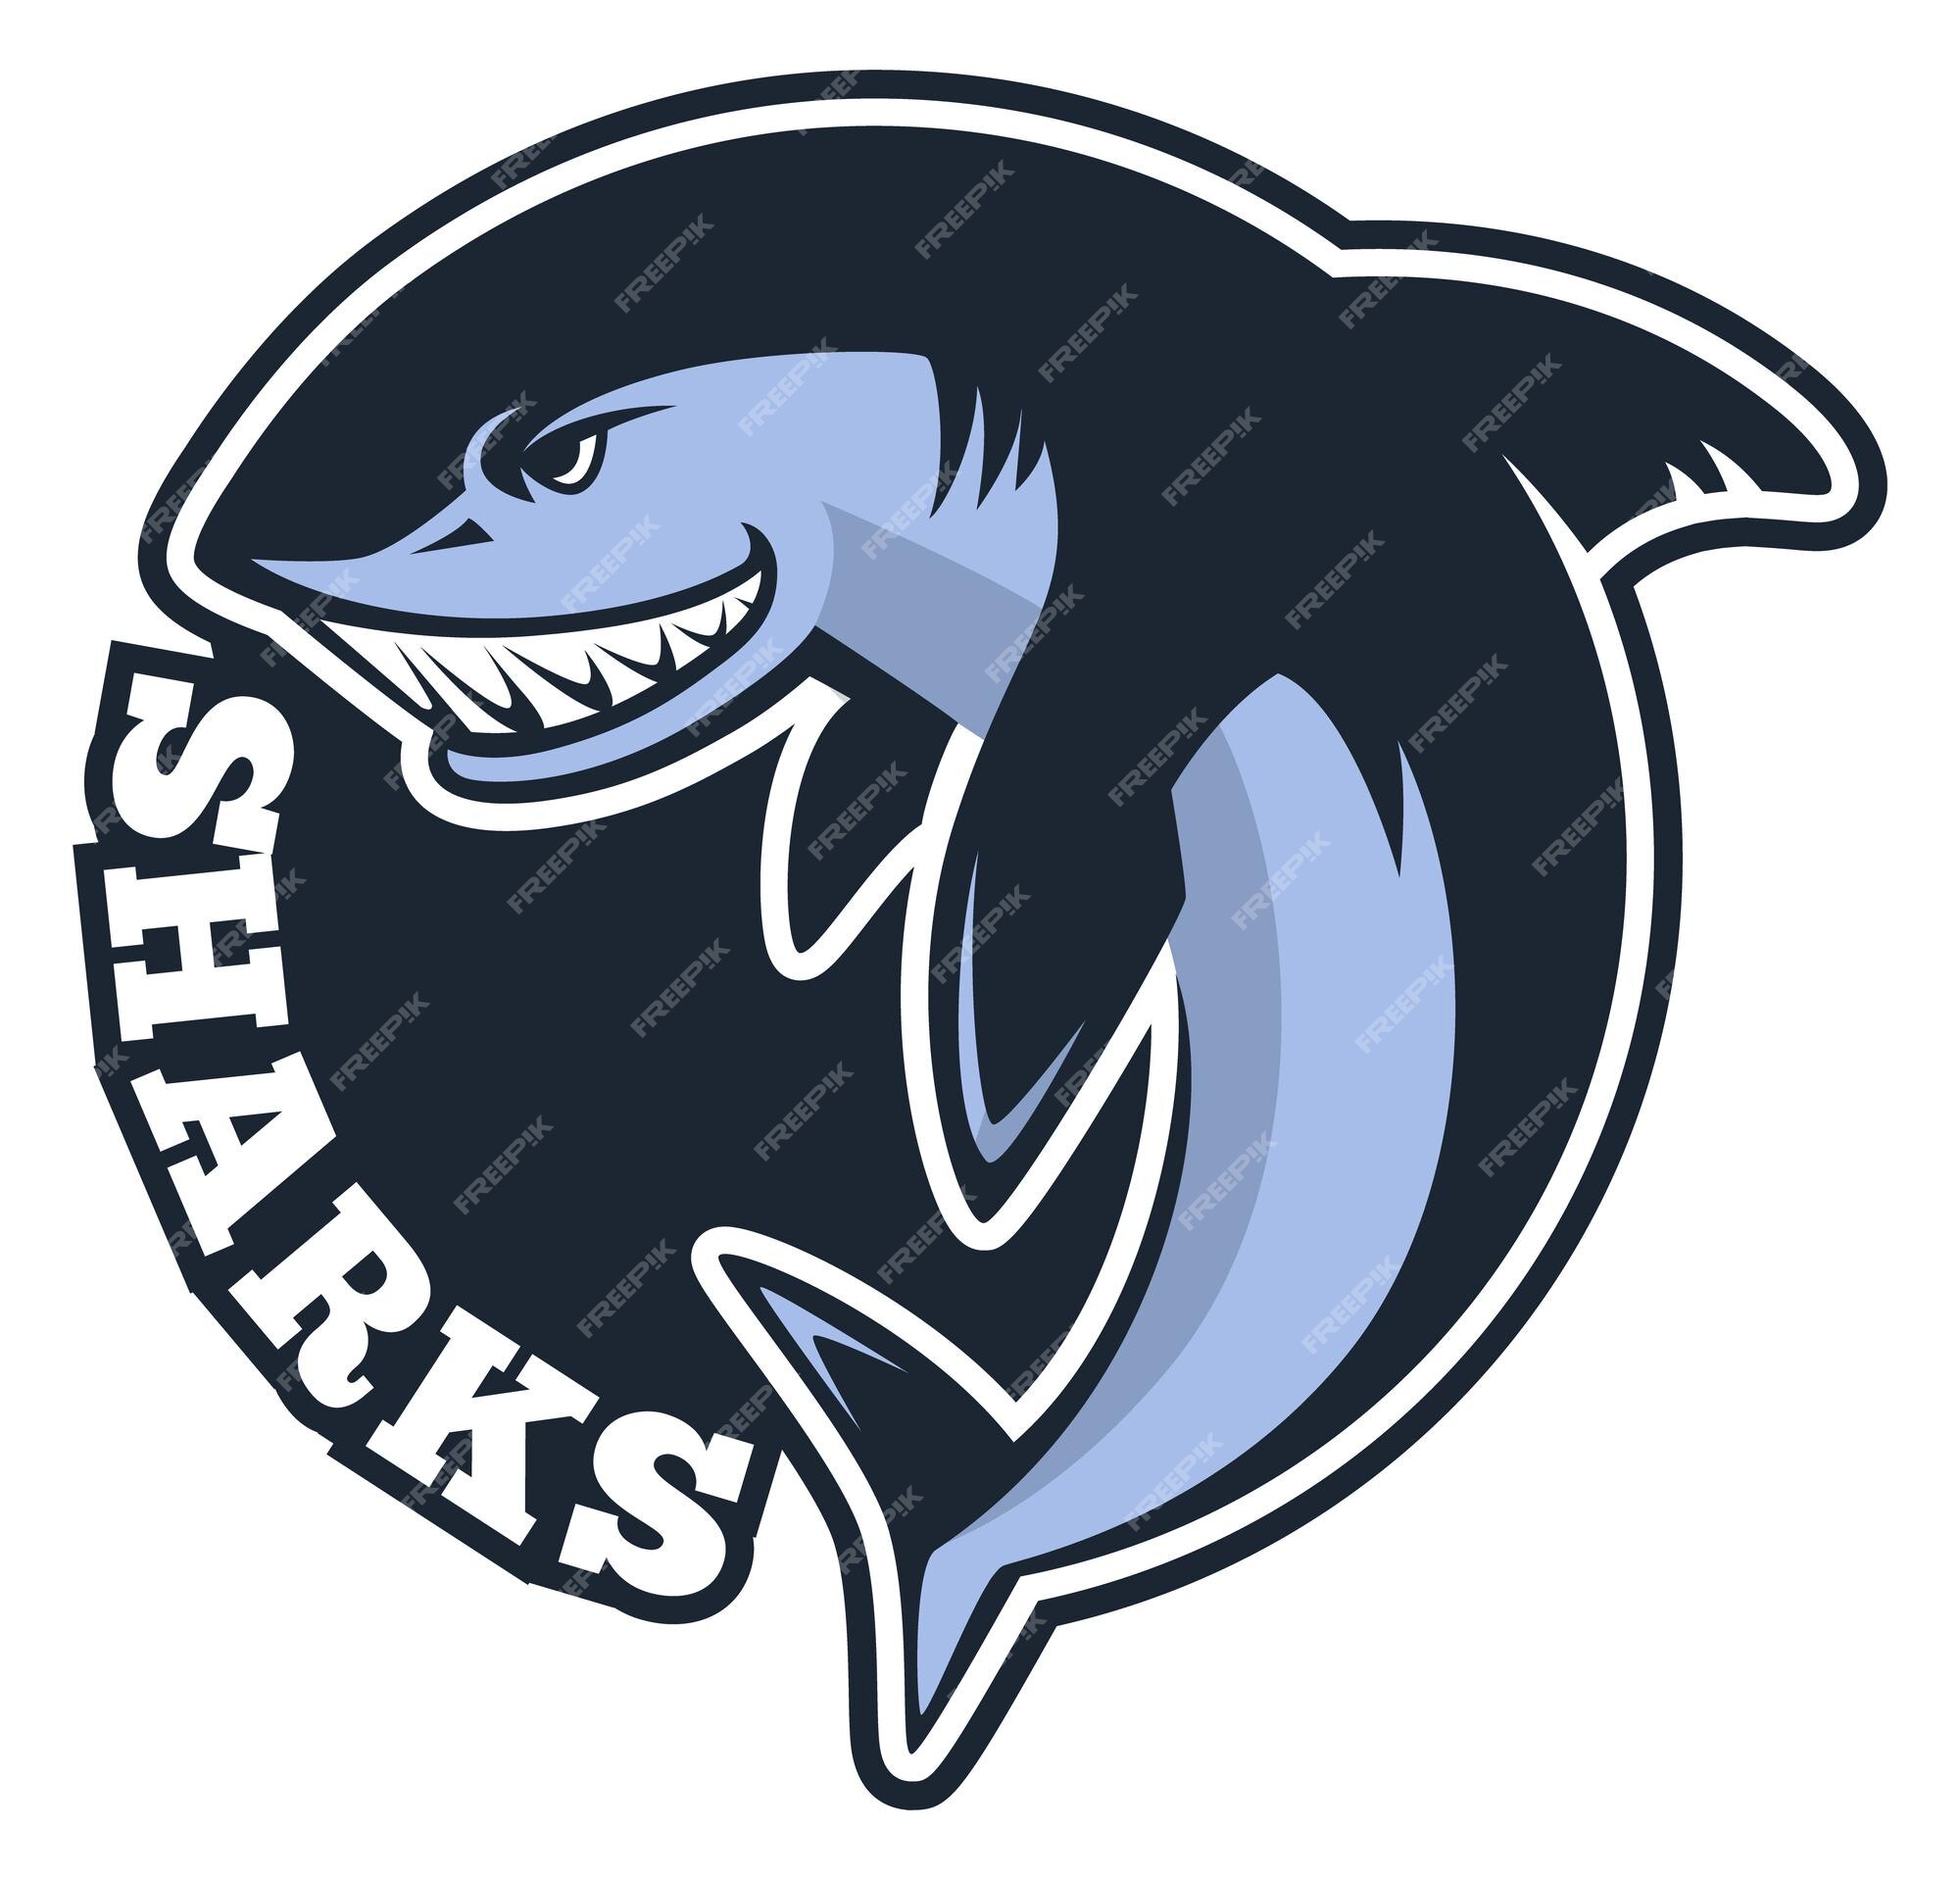 Team SHARK